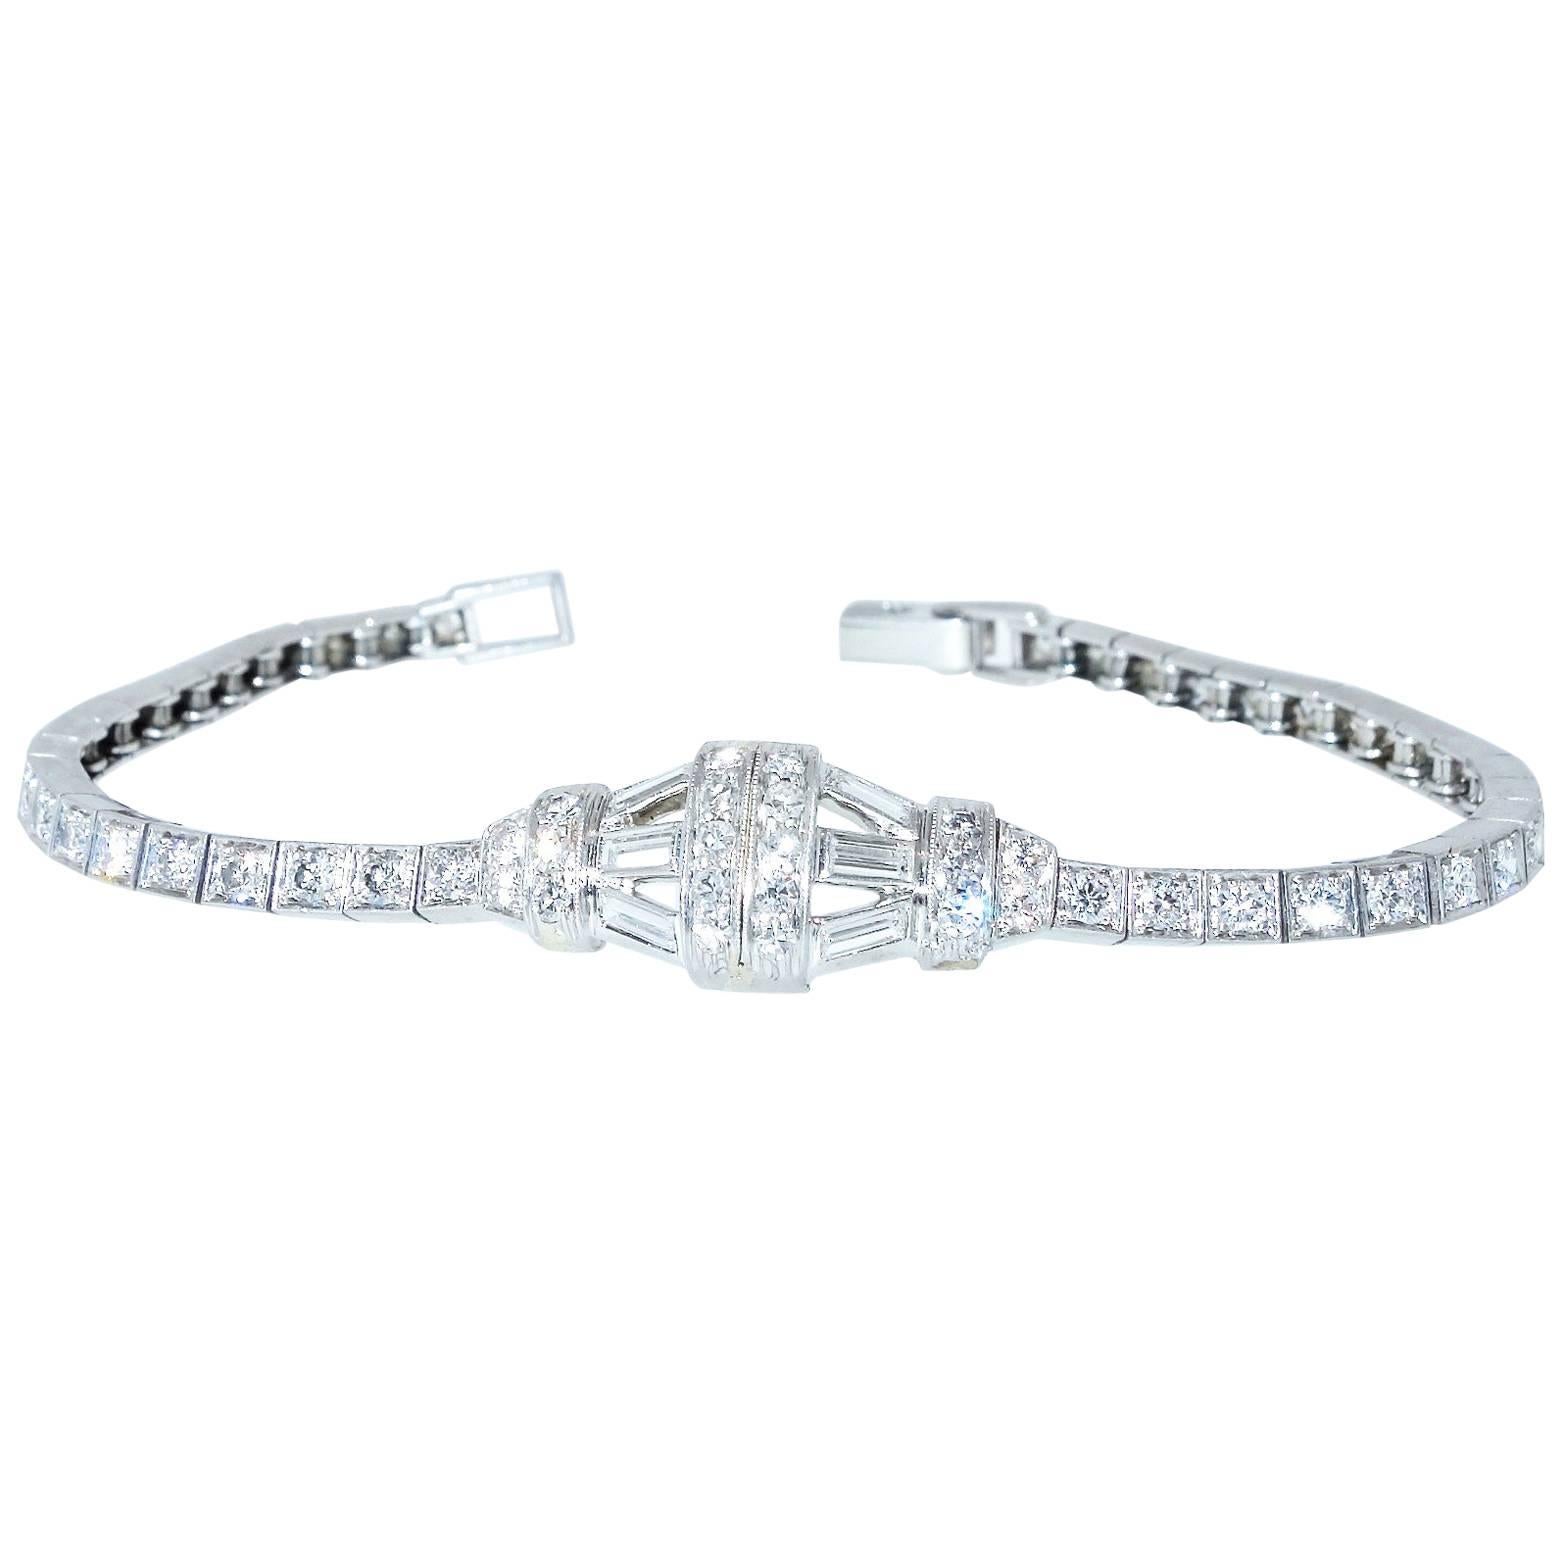 Tiffany & Co. Vintage Diamond Bracelet